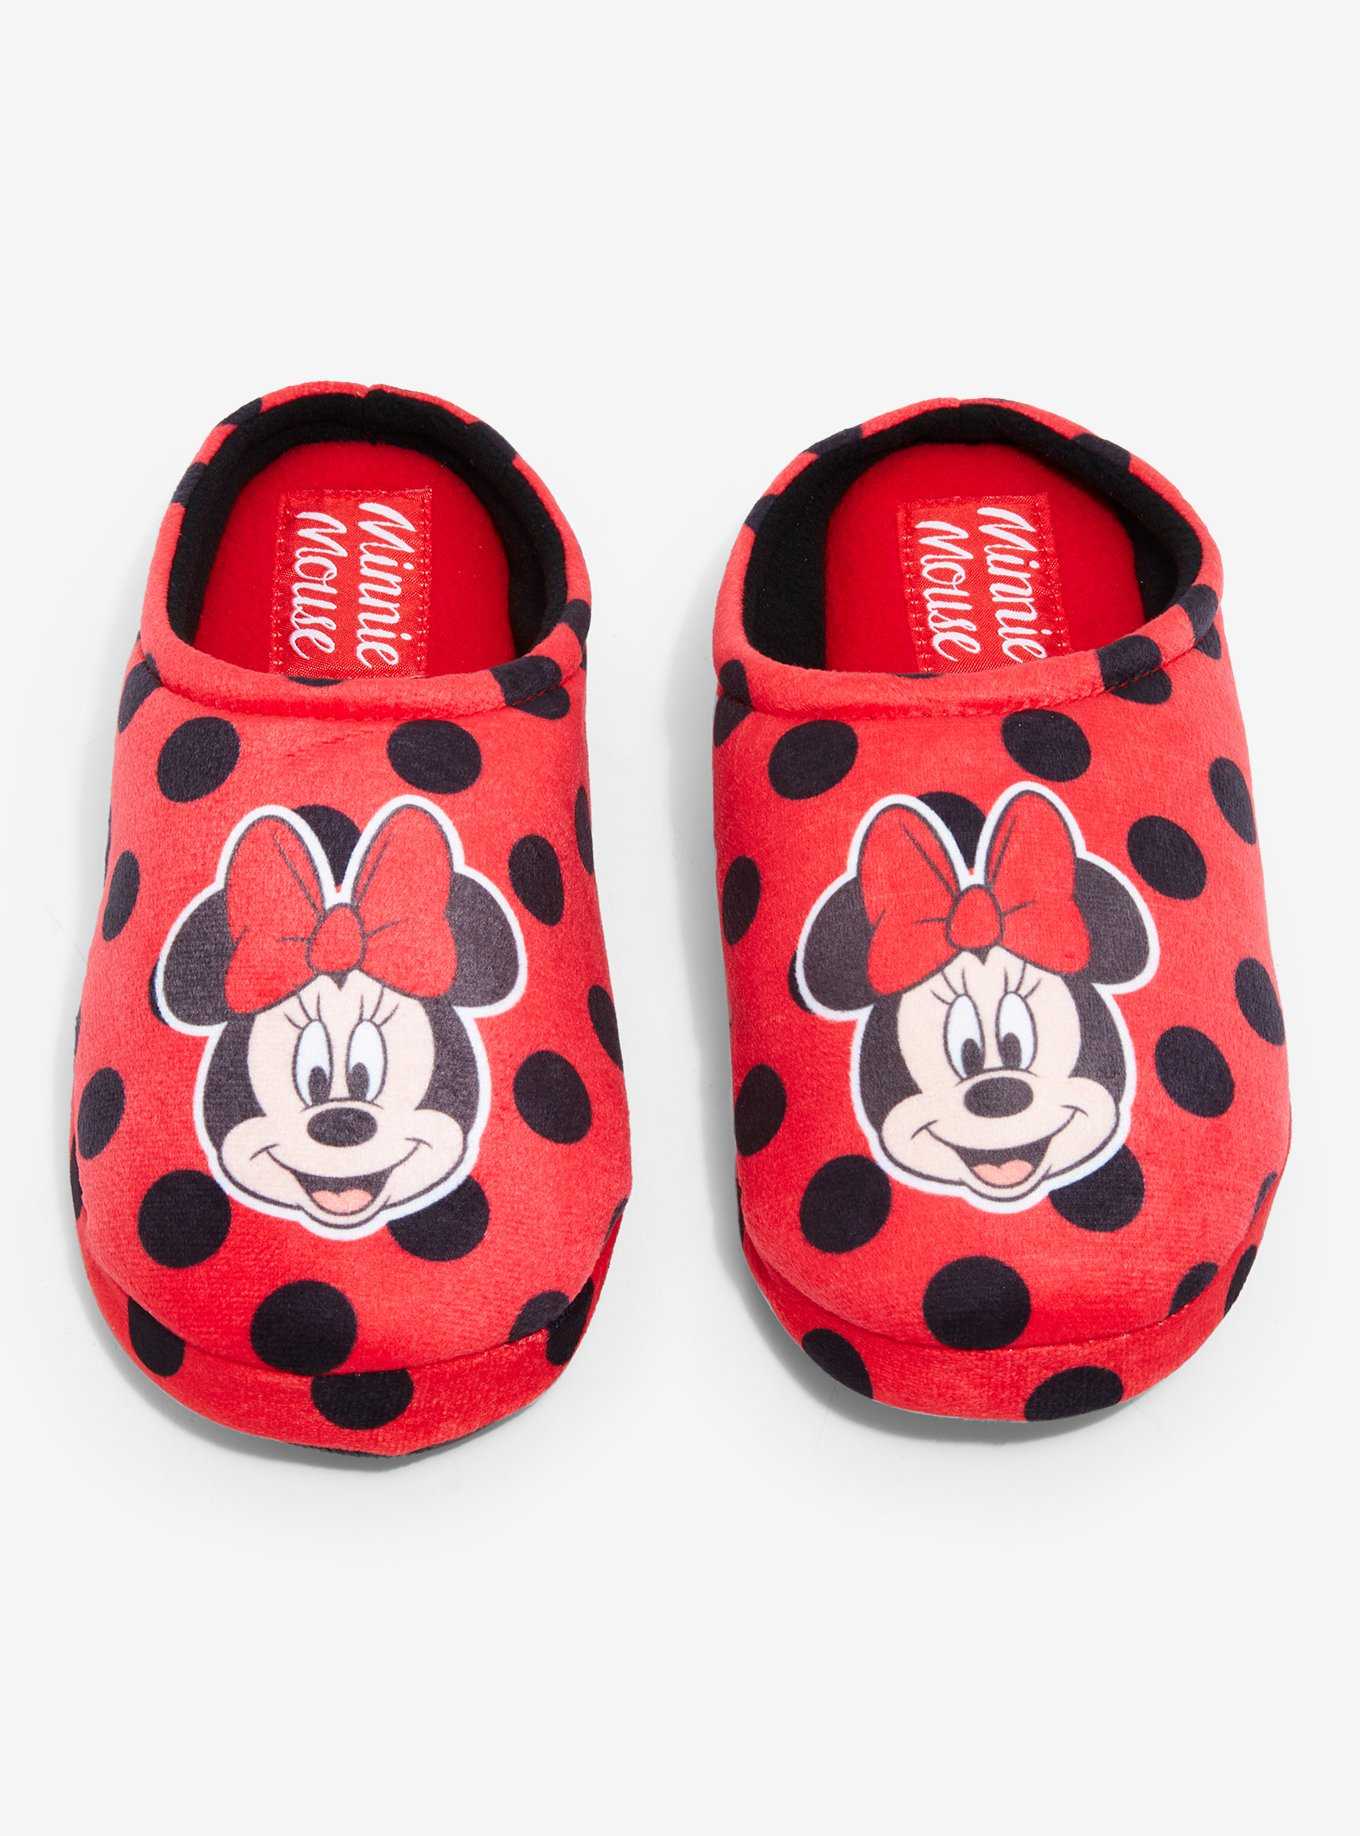 Disney Minnie Mouse Polka Dot Slippers, , hi-res